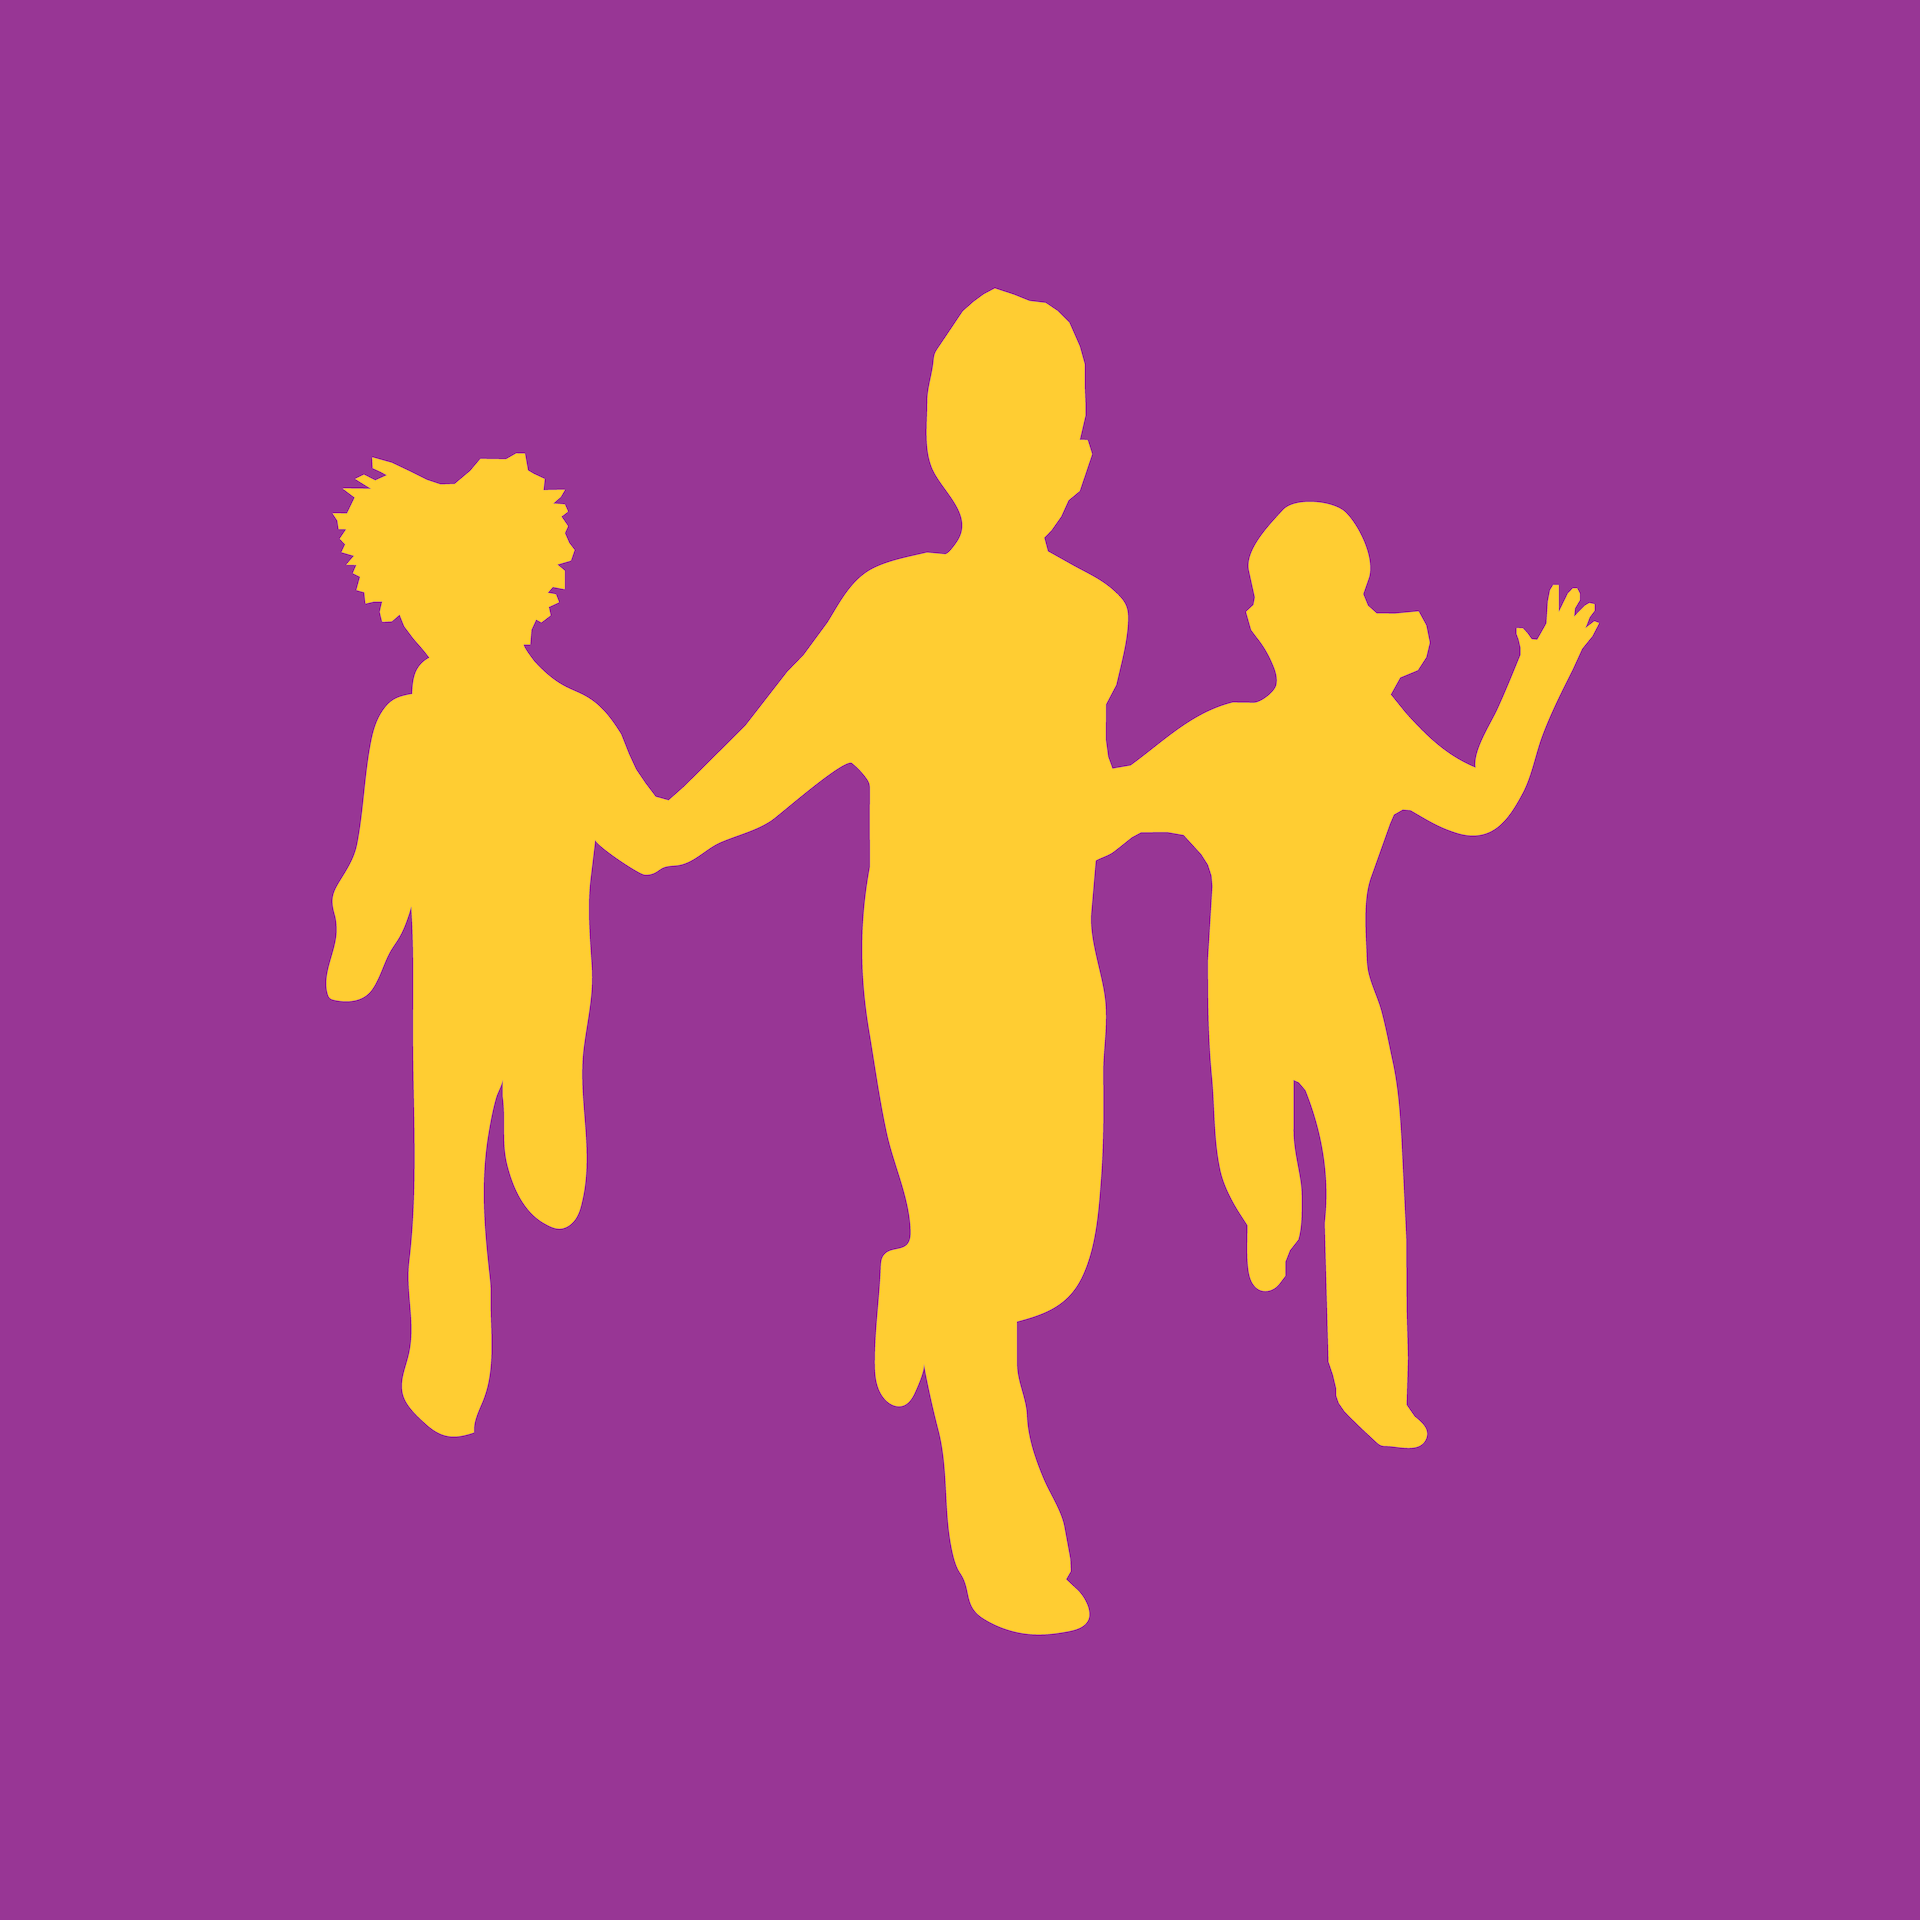 yellow silhouette of children holding hands running